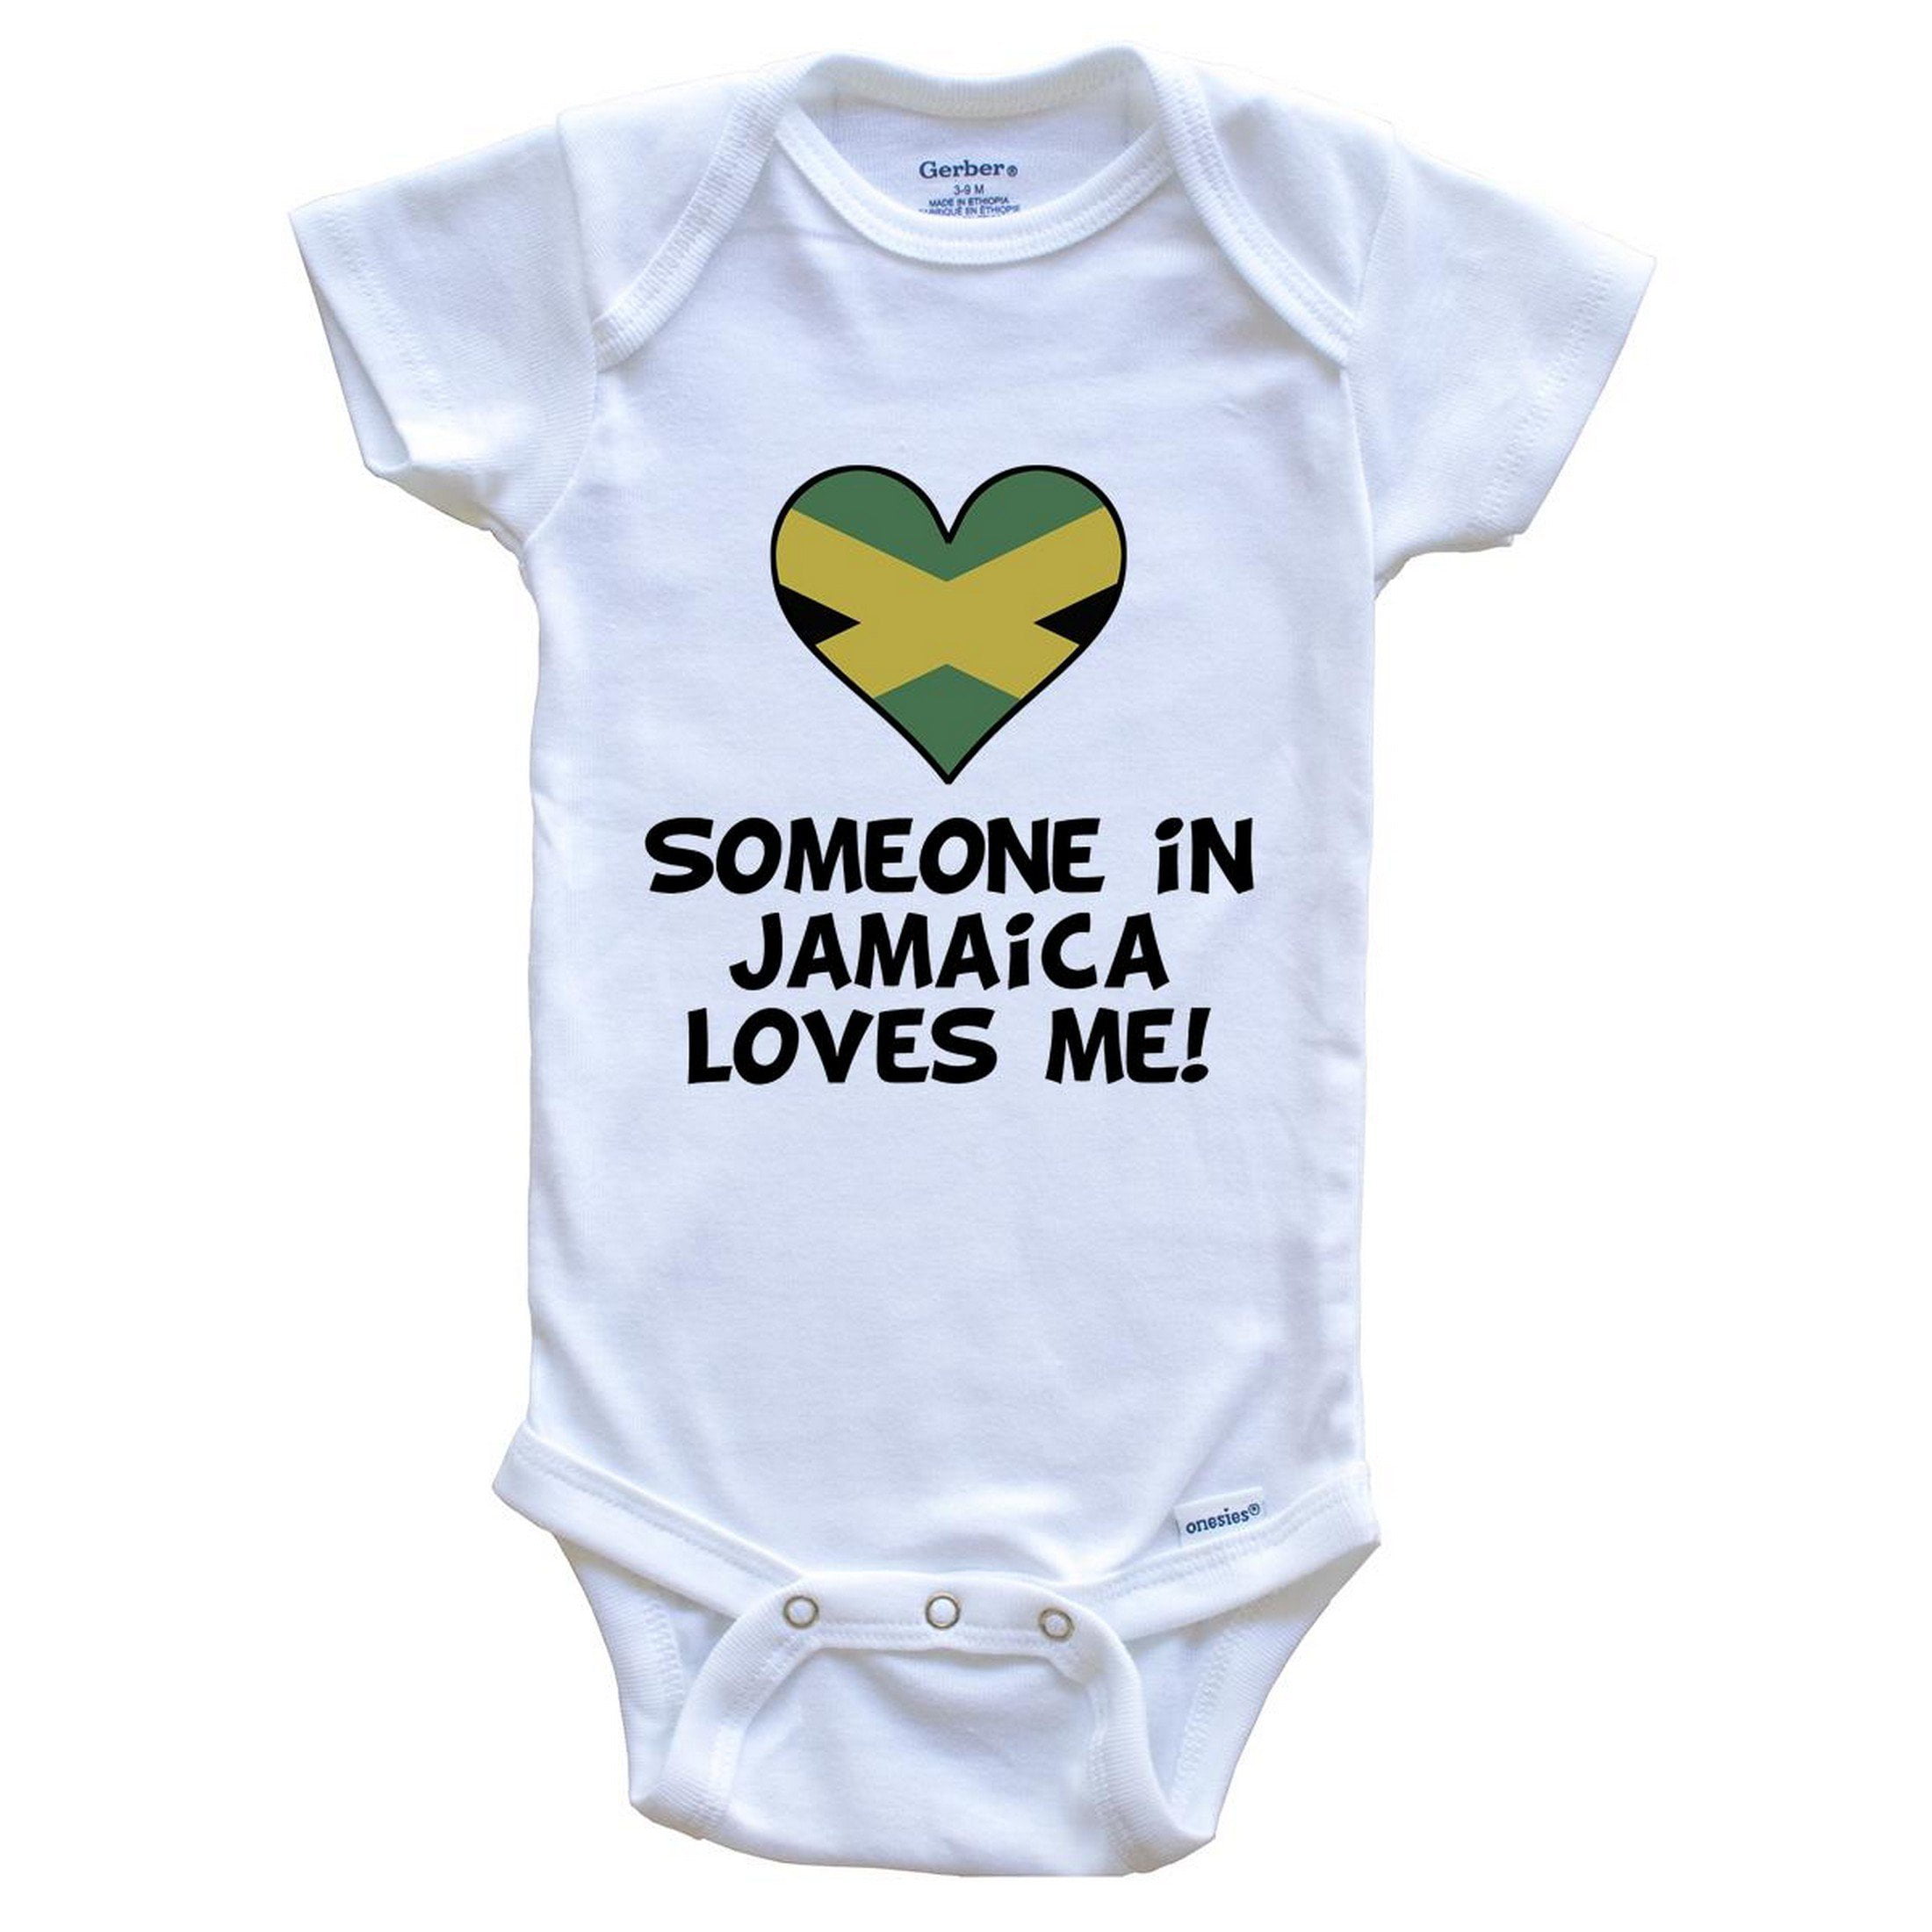 I'm Jamaican With Jamaica Flag Baby Bodysuit Love me 